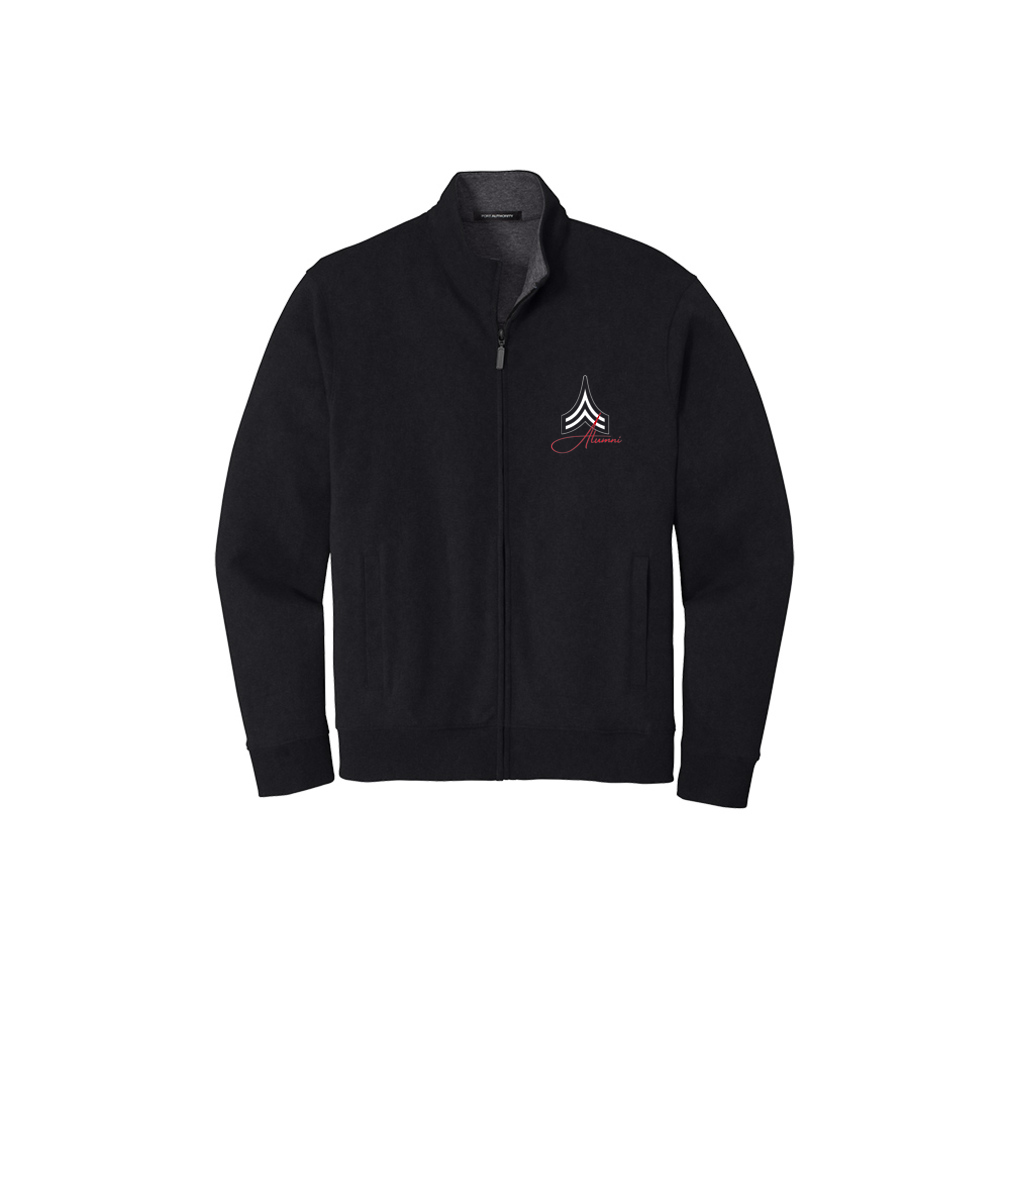 Alumni Full-Zip Sweater